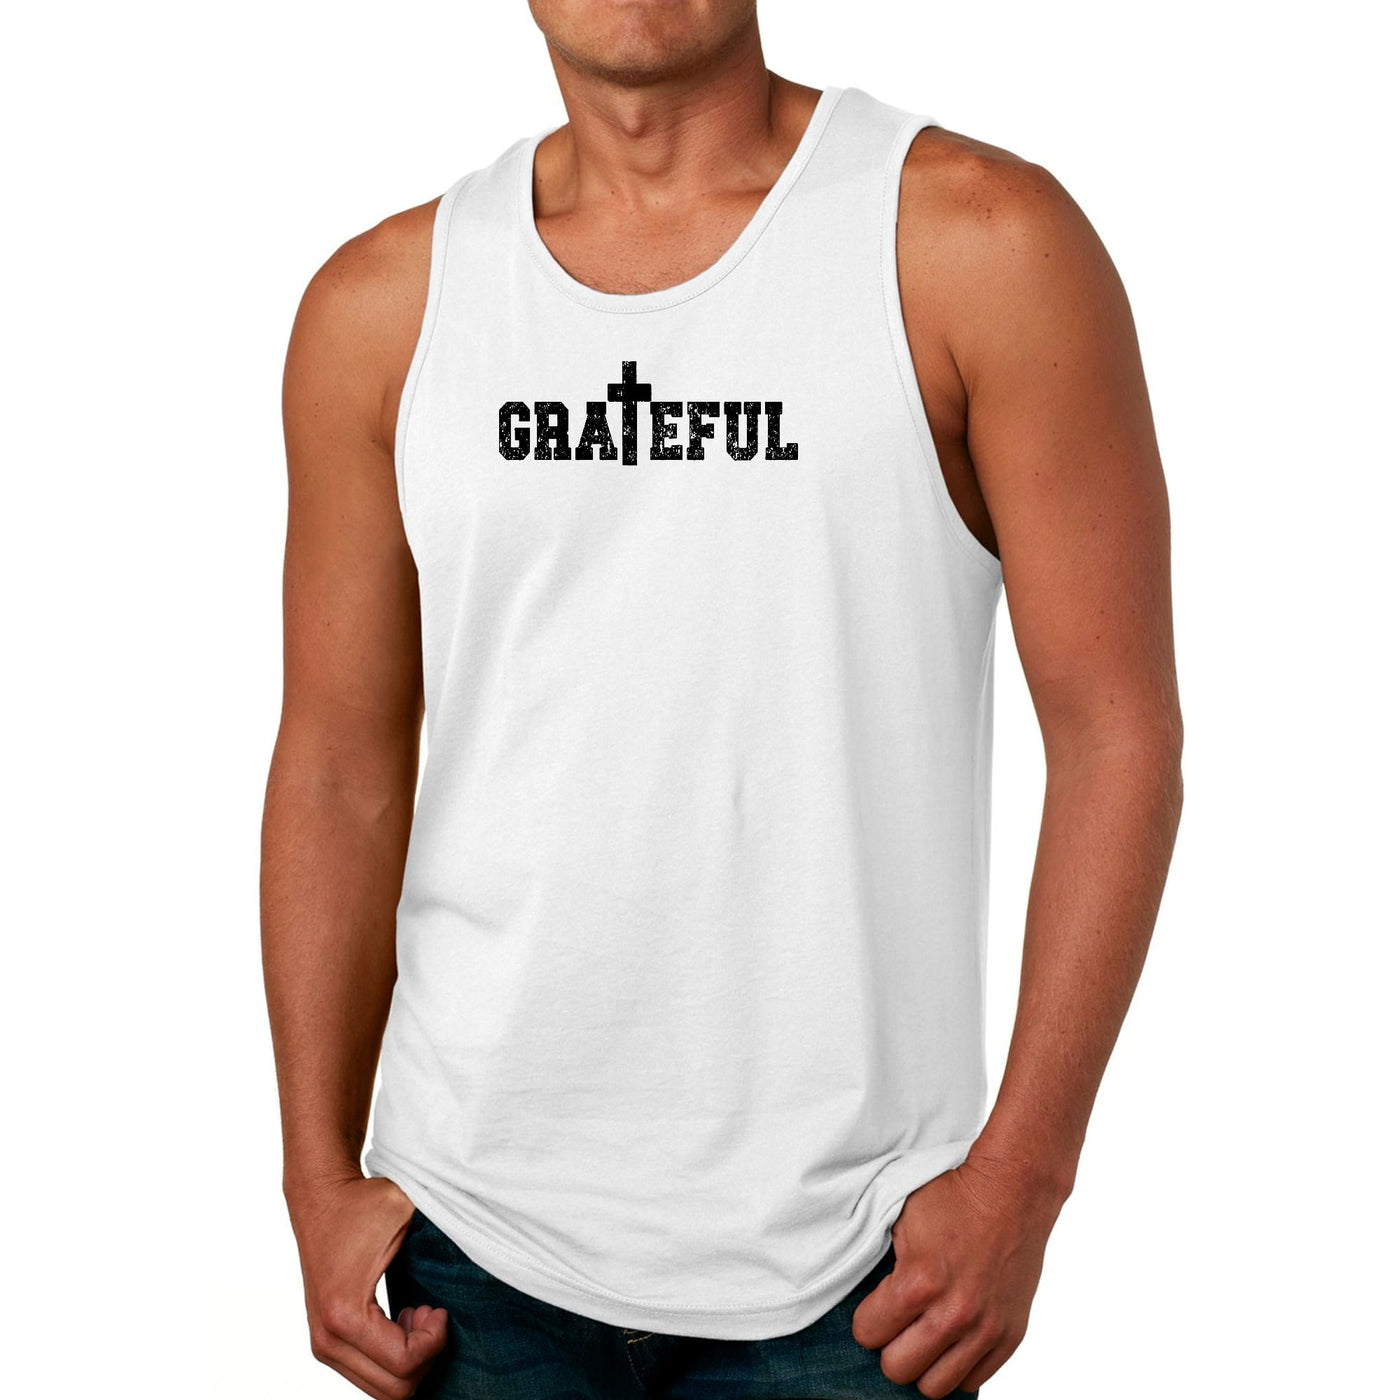 Mens Tank Top Fitness T - shirt Grateful Print - Tops